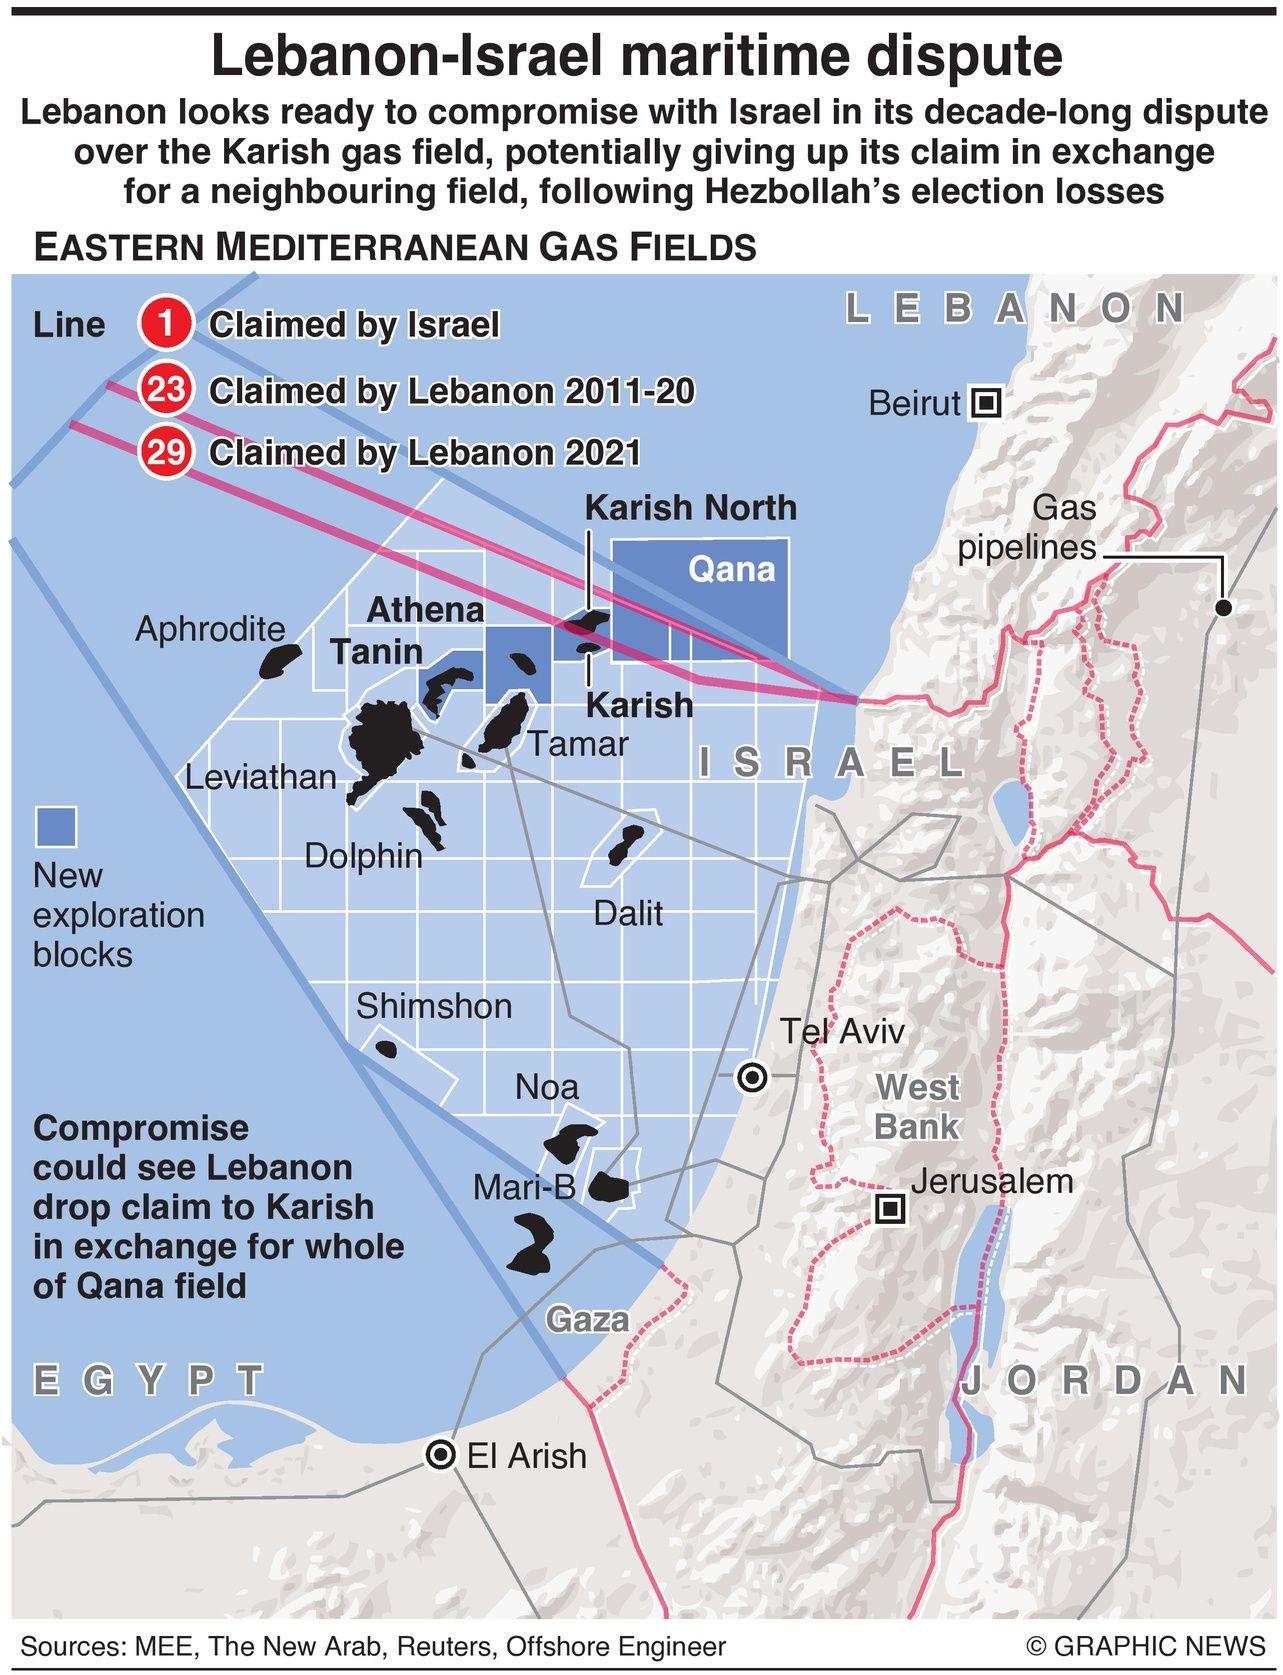 Map of Lebanon-Israel Offshore Energy (oil) dispute